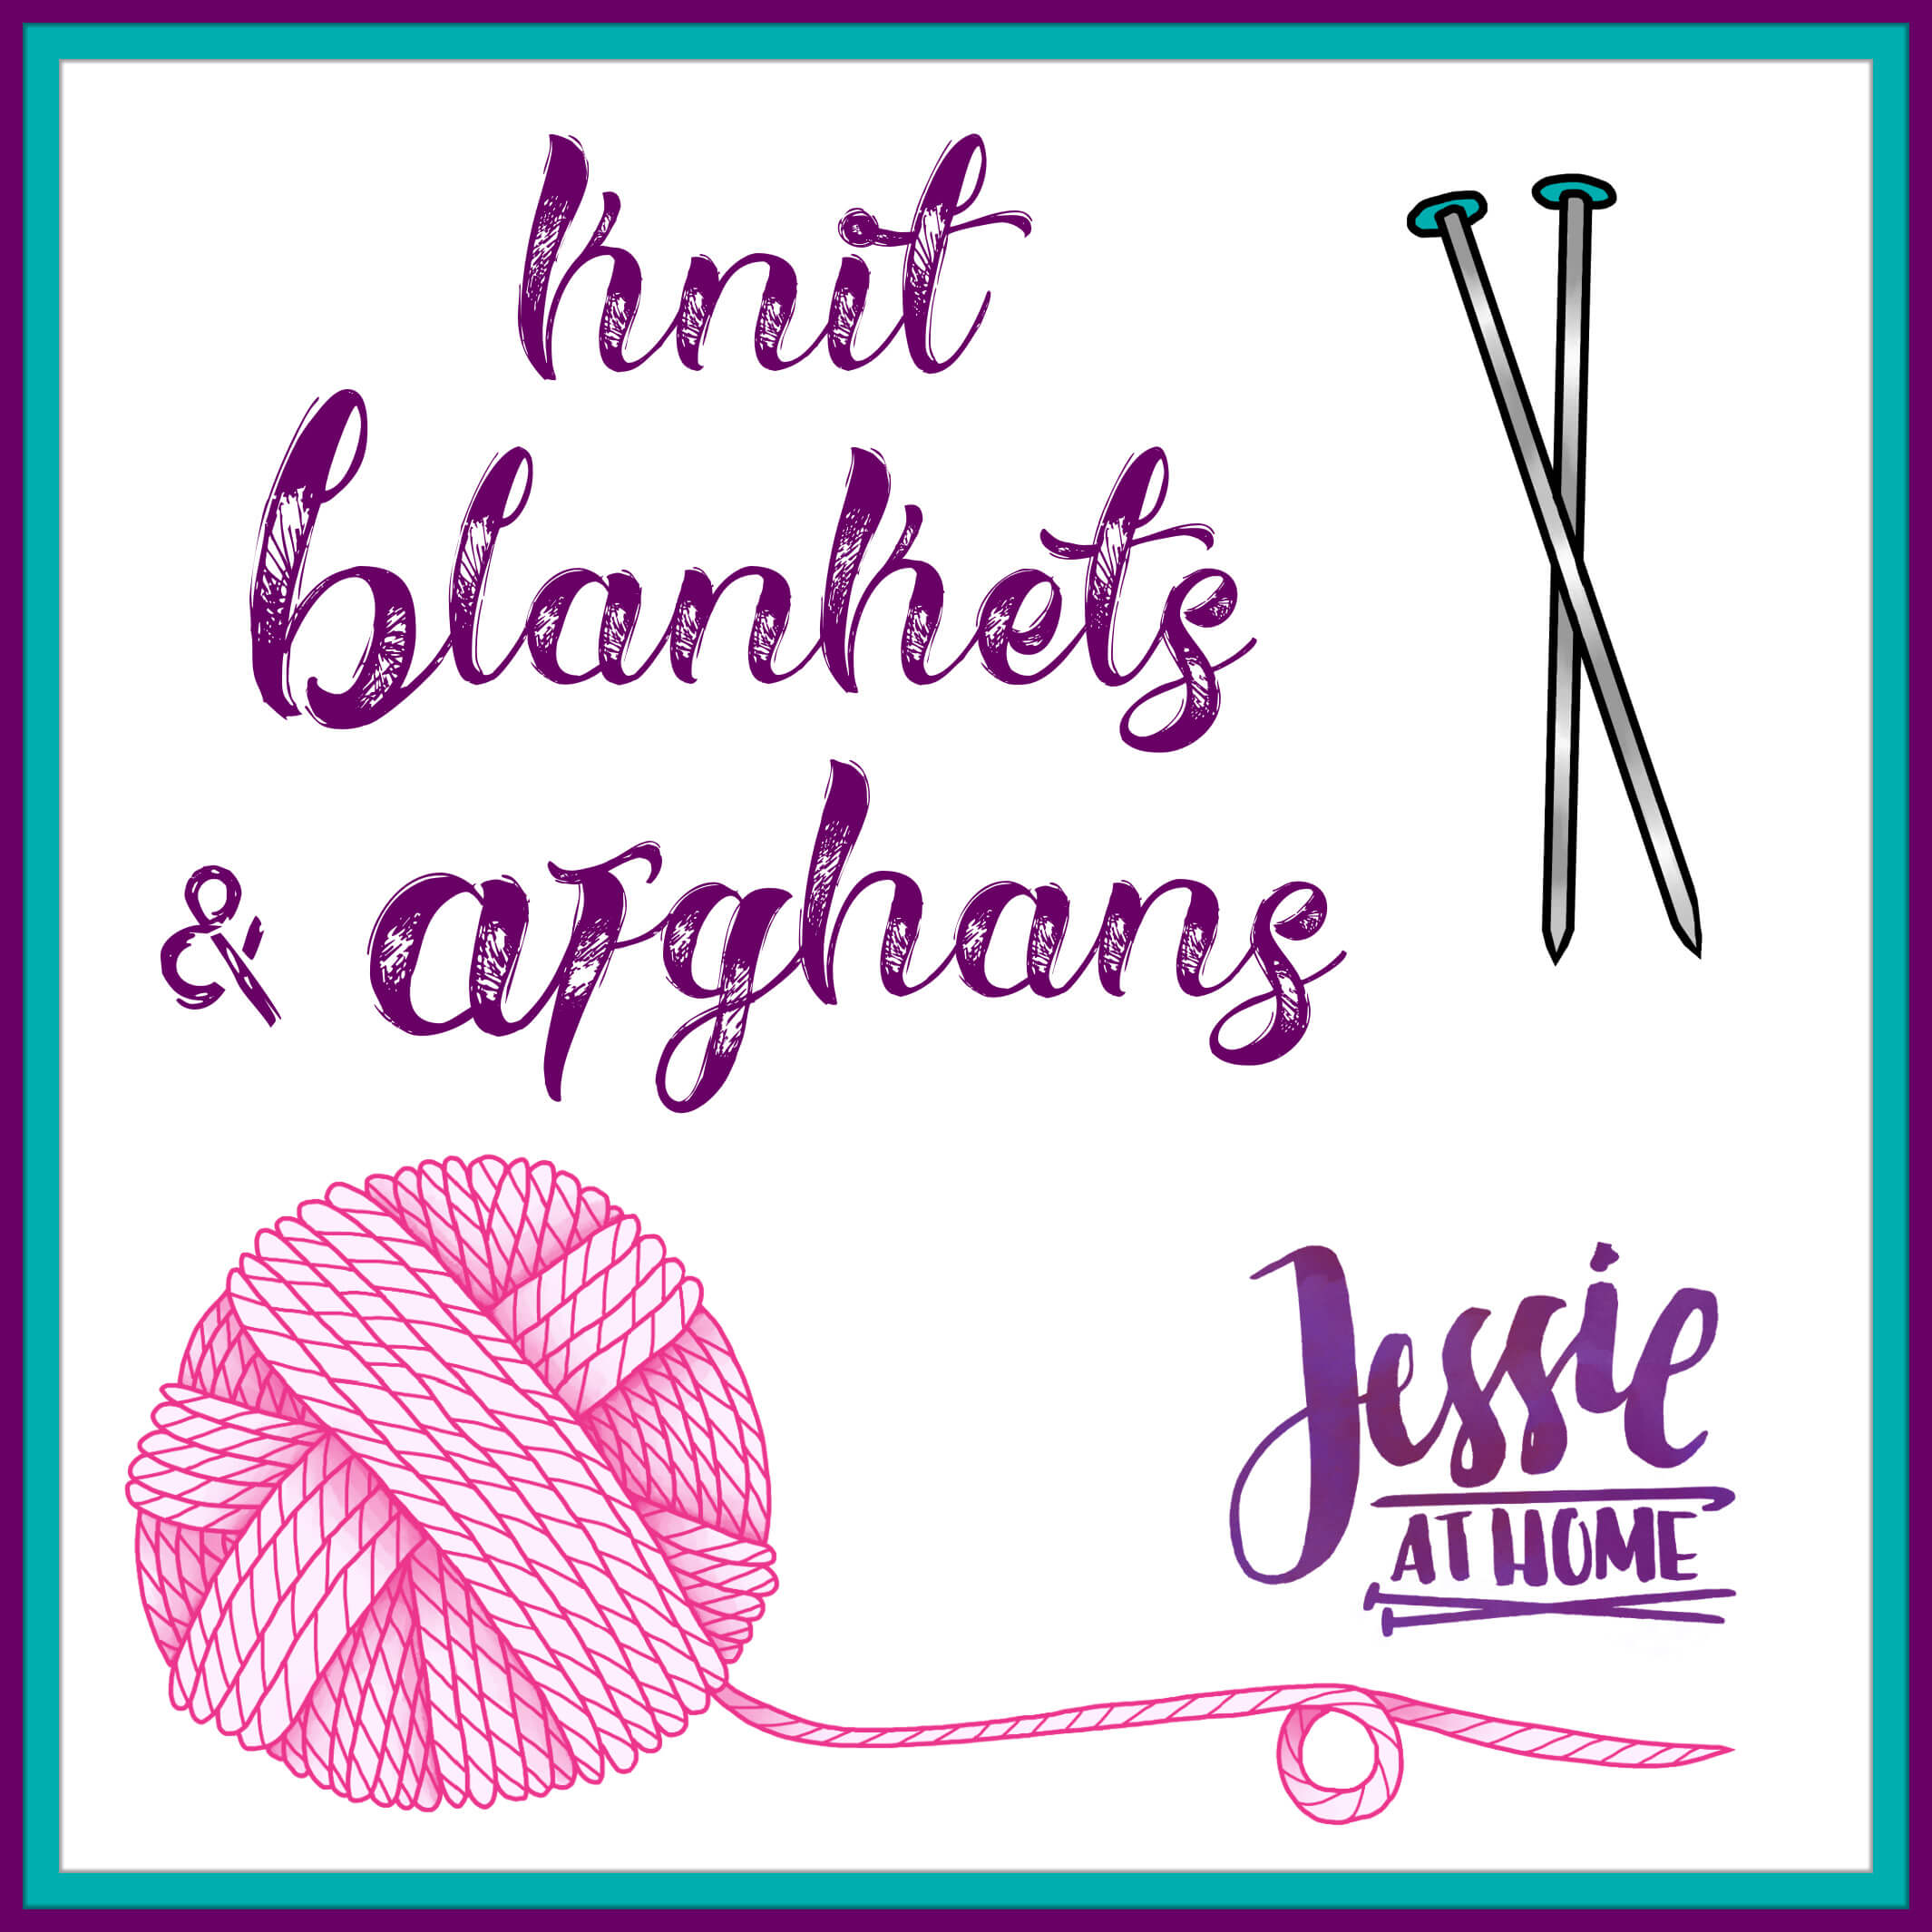 Knit Blankets & Afghans Menu on Jessie At Home